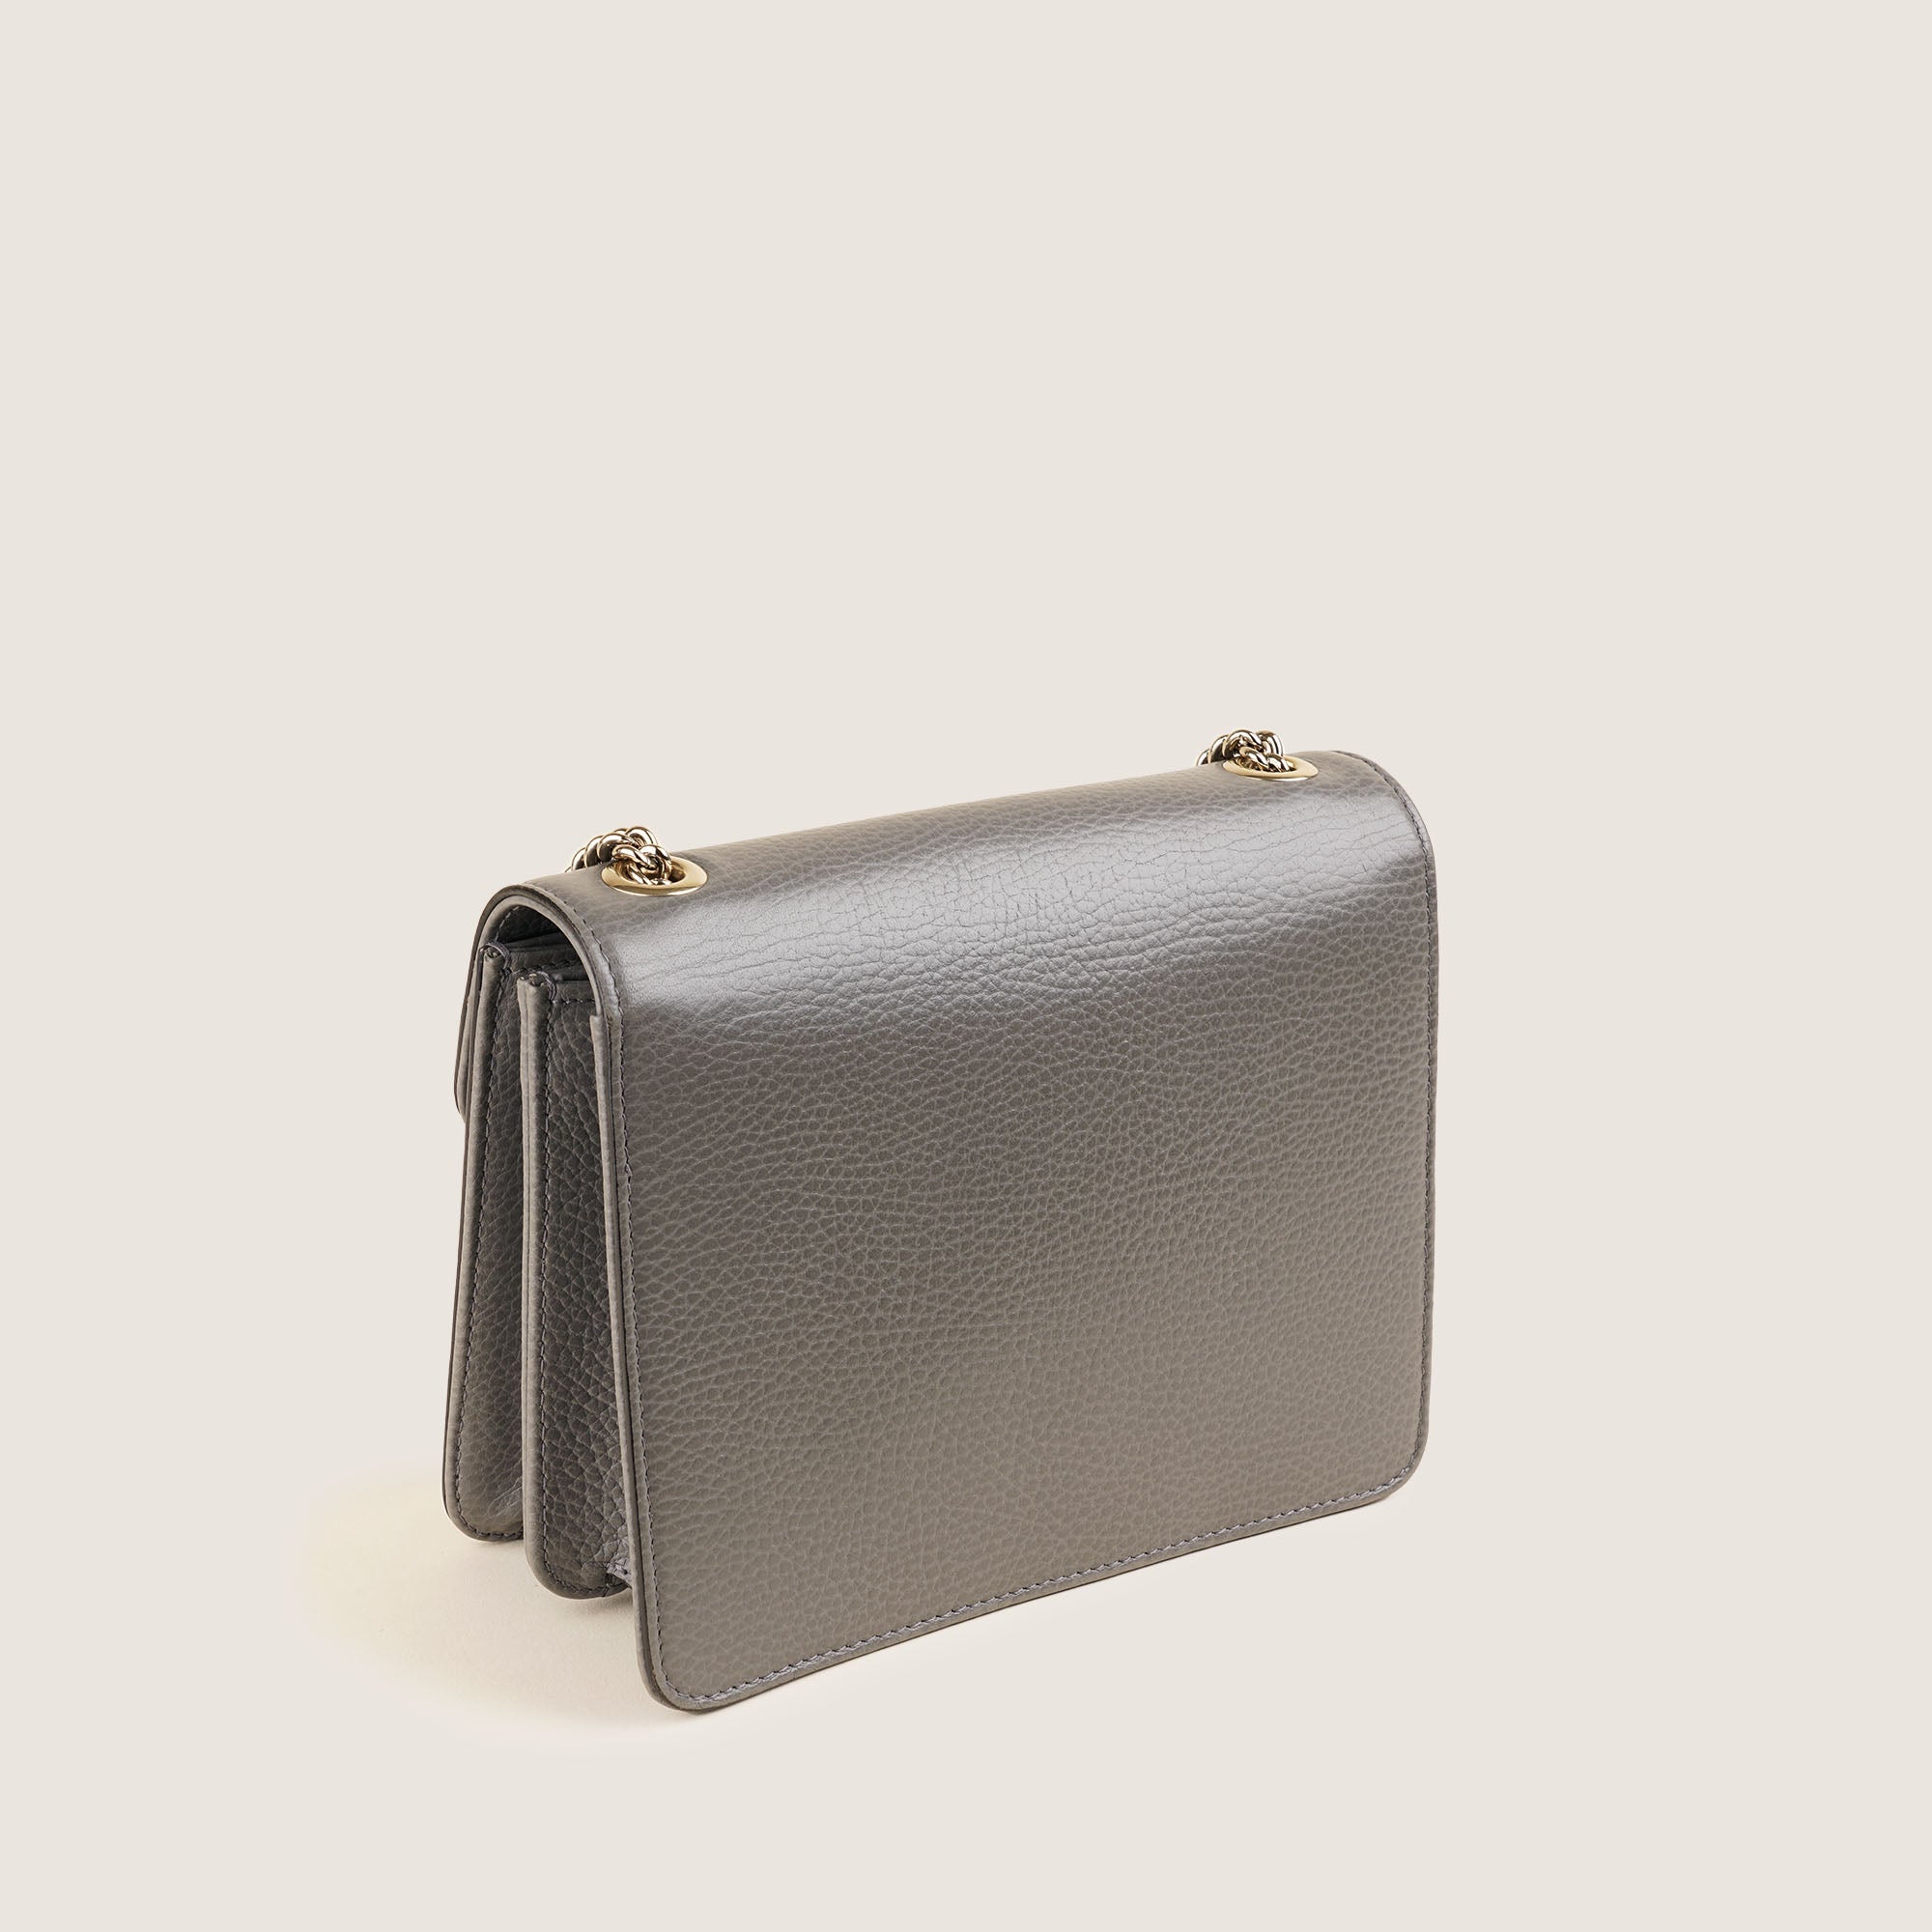 Interlocking GG Shoulder Bag - GUCCI - Affordable Luxury